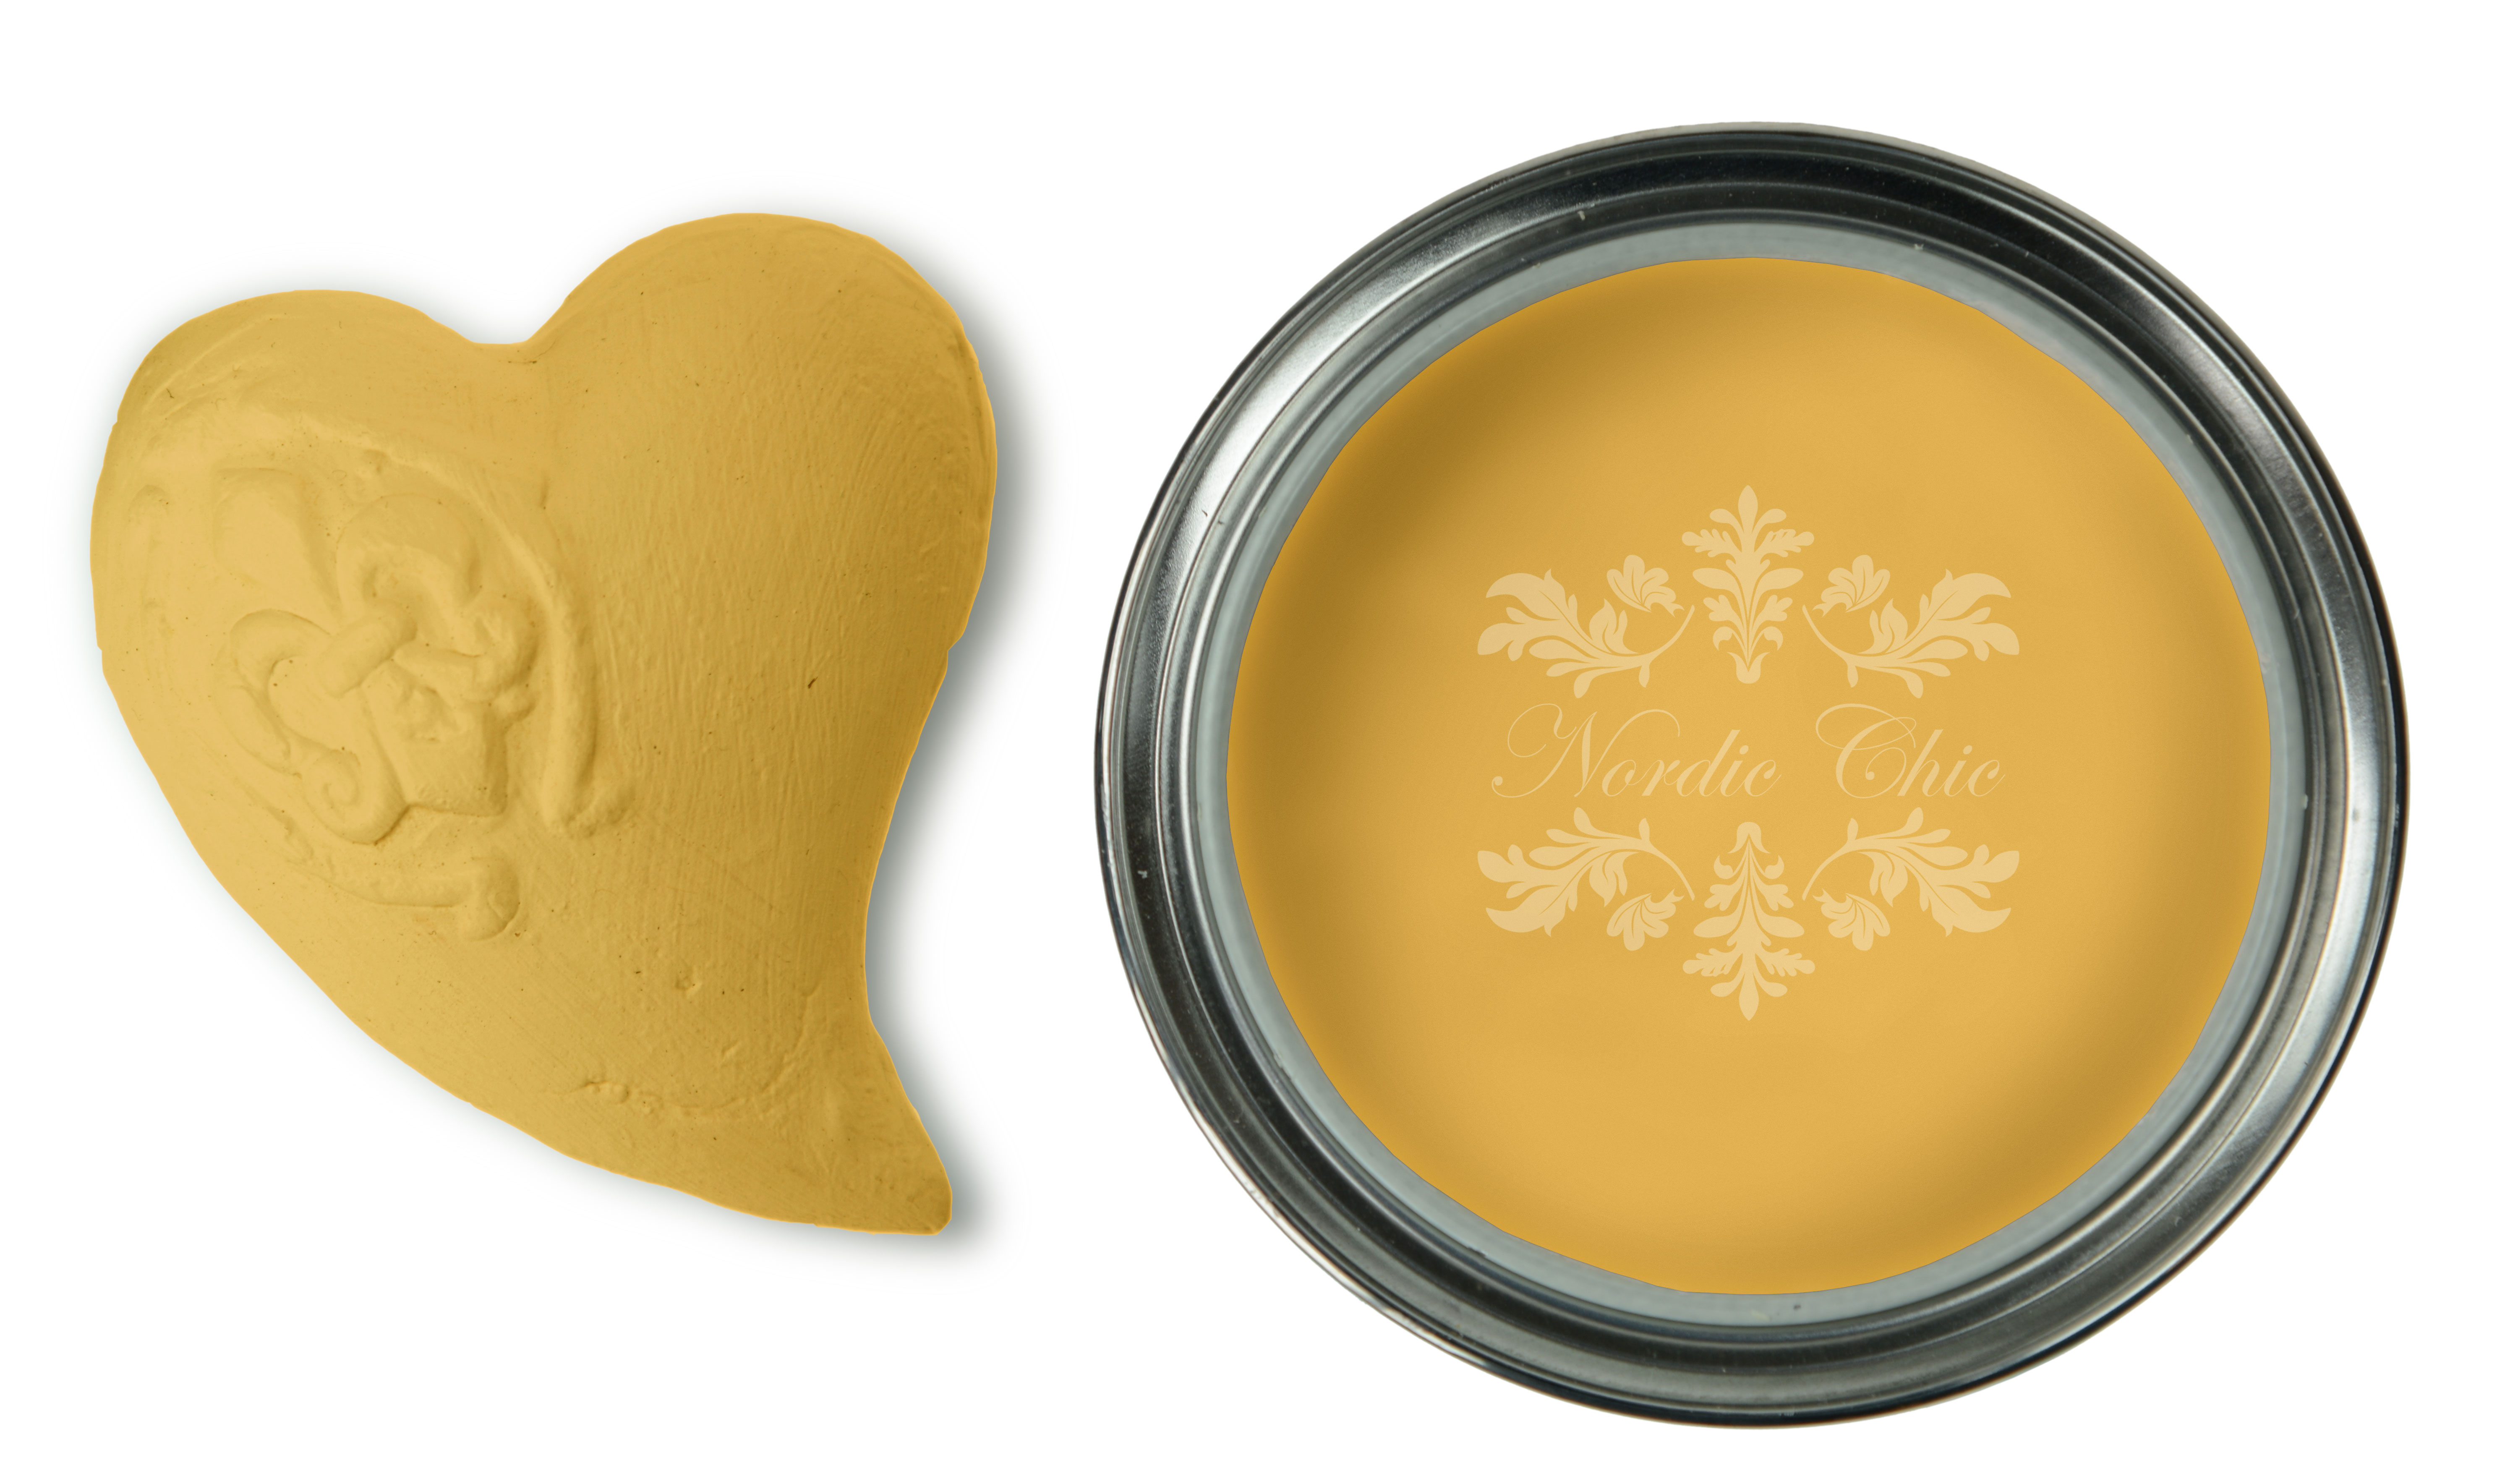 Pintura a tiza amarillo mostaza - Nordic Chic® - French Mustard - Prístina Holganza